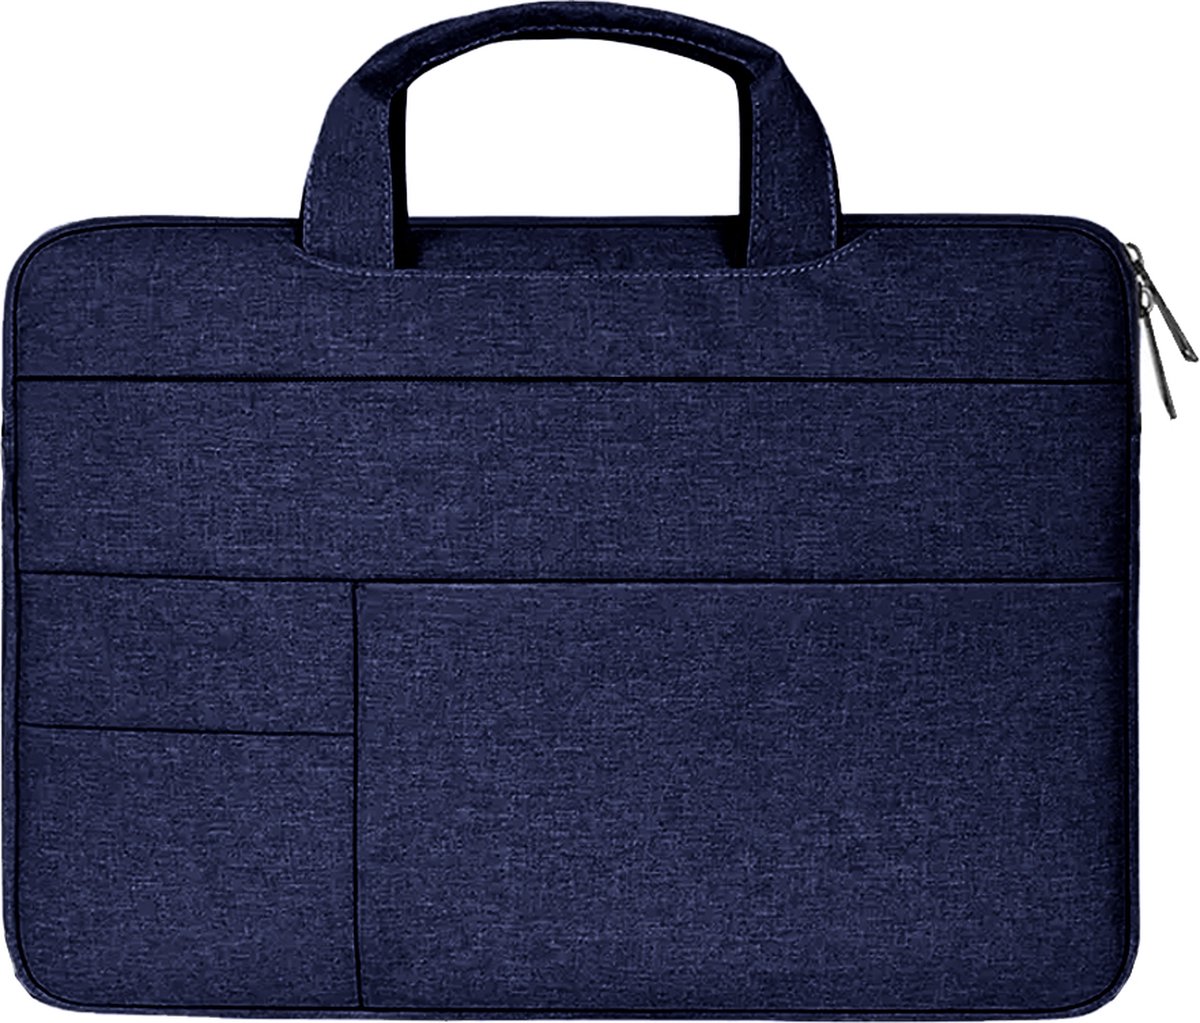 Case2go - Laptophoes geschikt voor Samsung Portege - Laptoptas 13 inch / 13.3 inch - Spatwaterdicht - Met Handvat - Donker Blauw